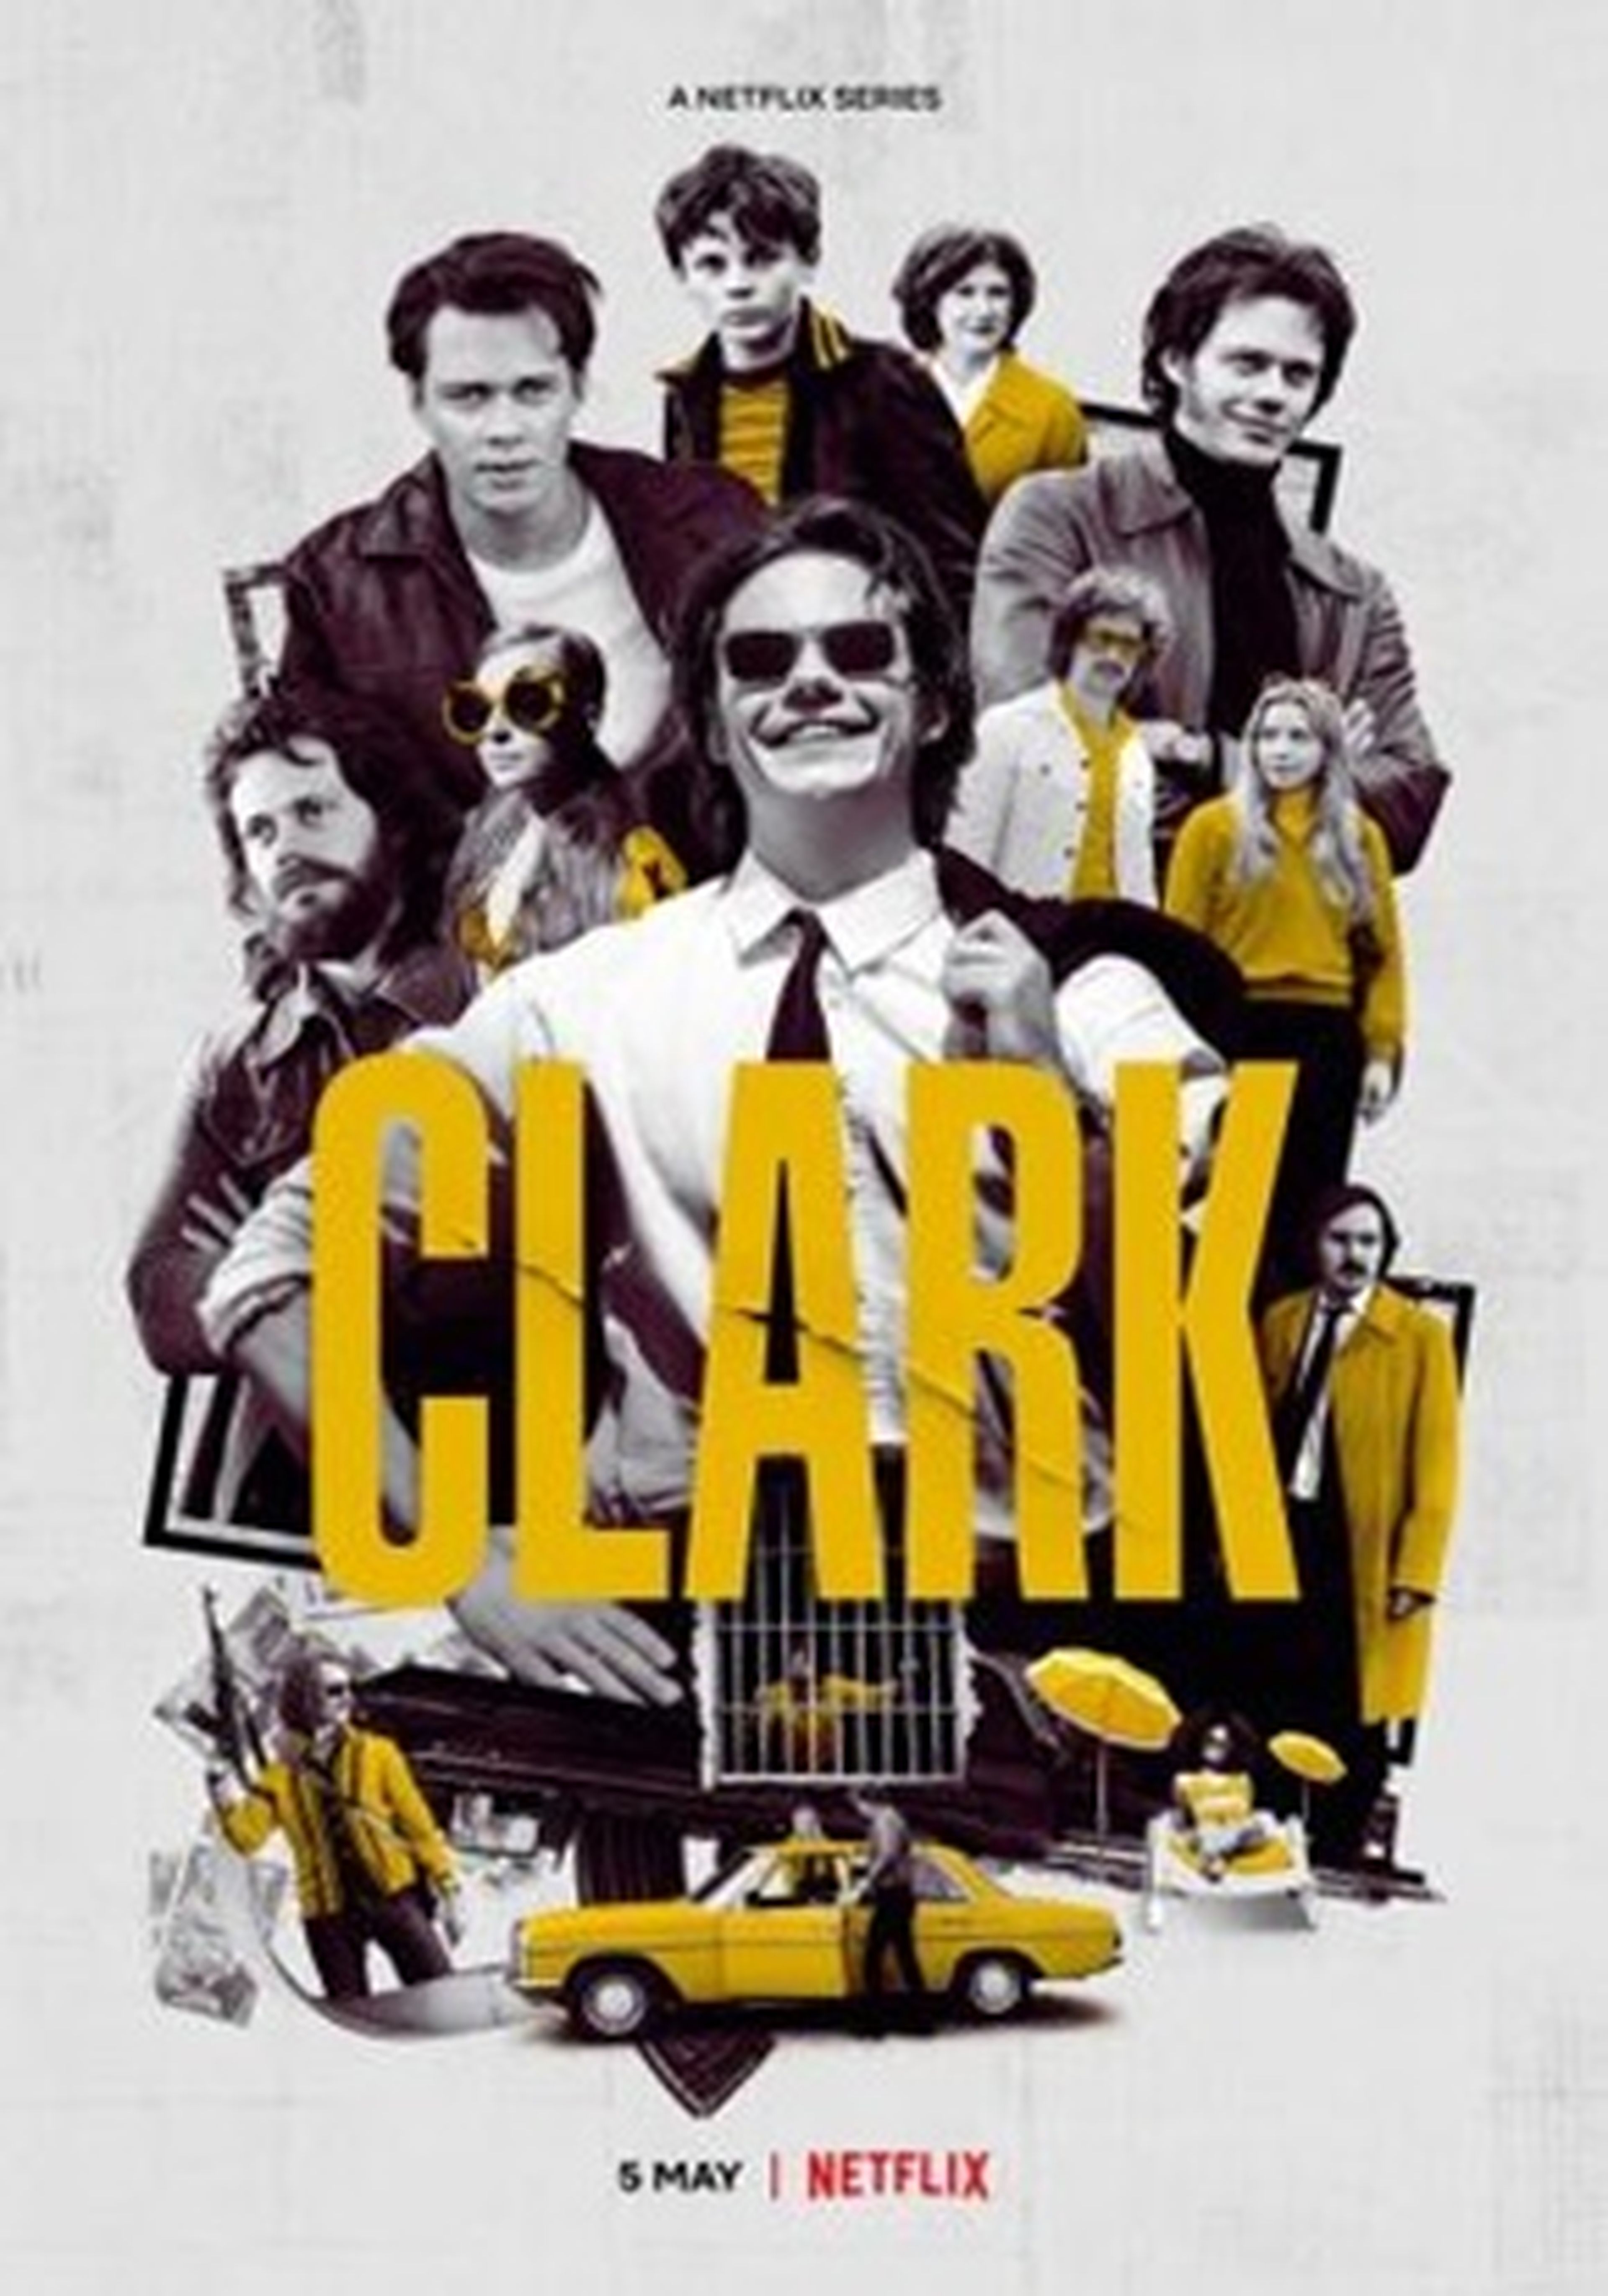 Clark cartel